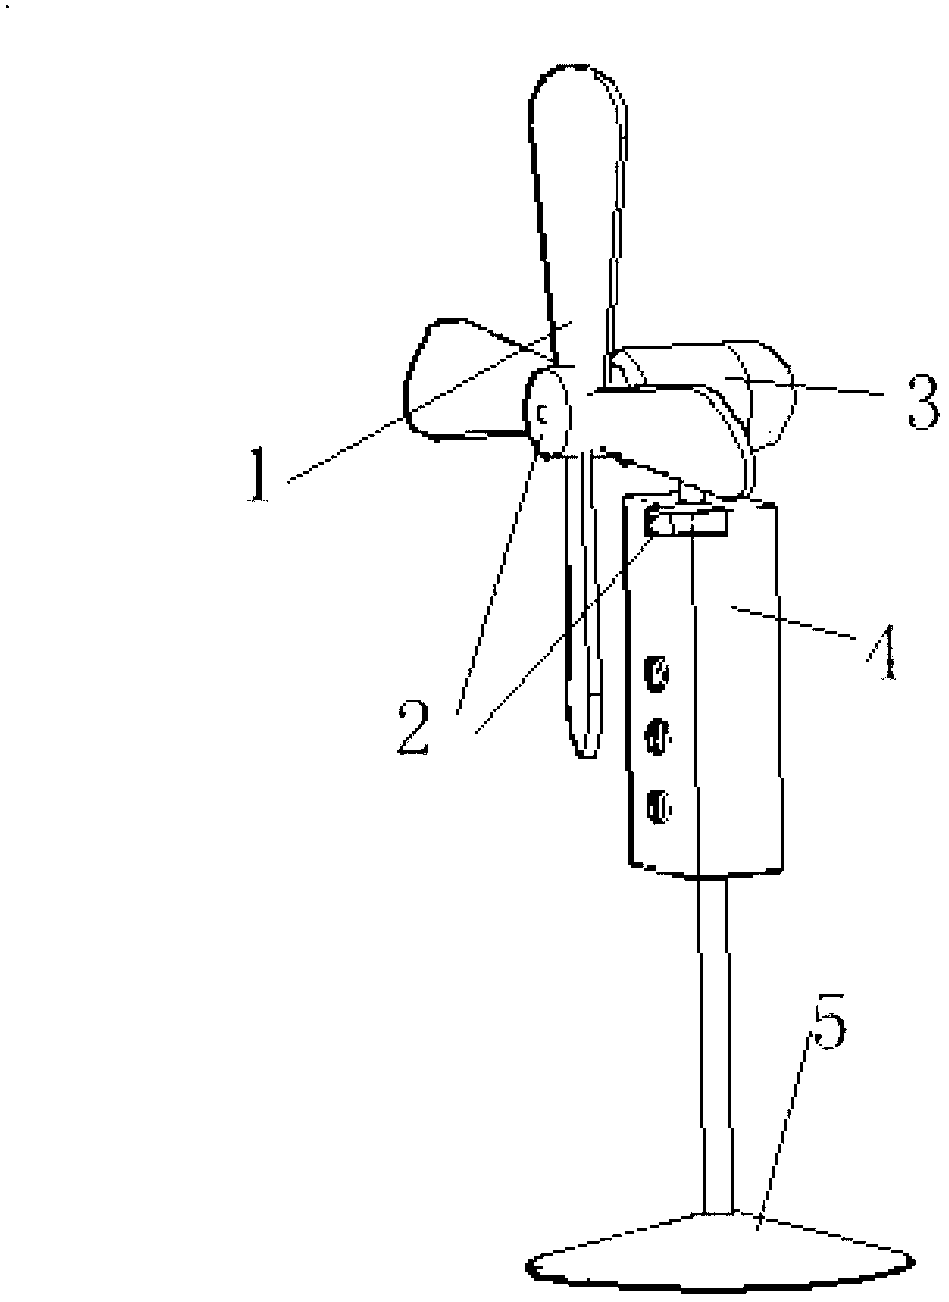 Human body position sensing electric fan